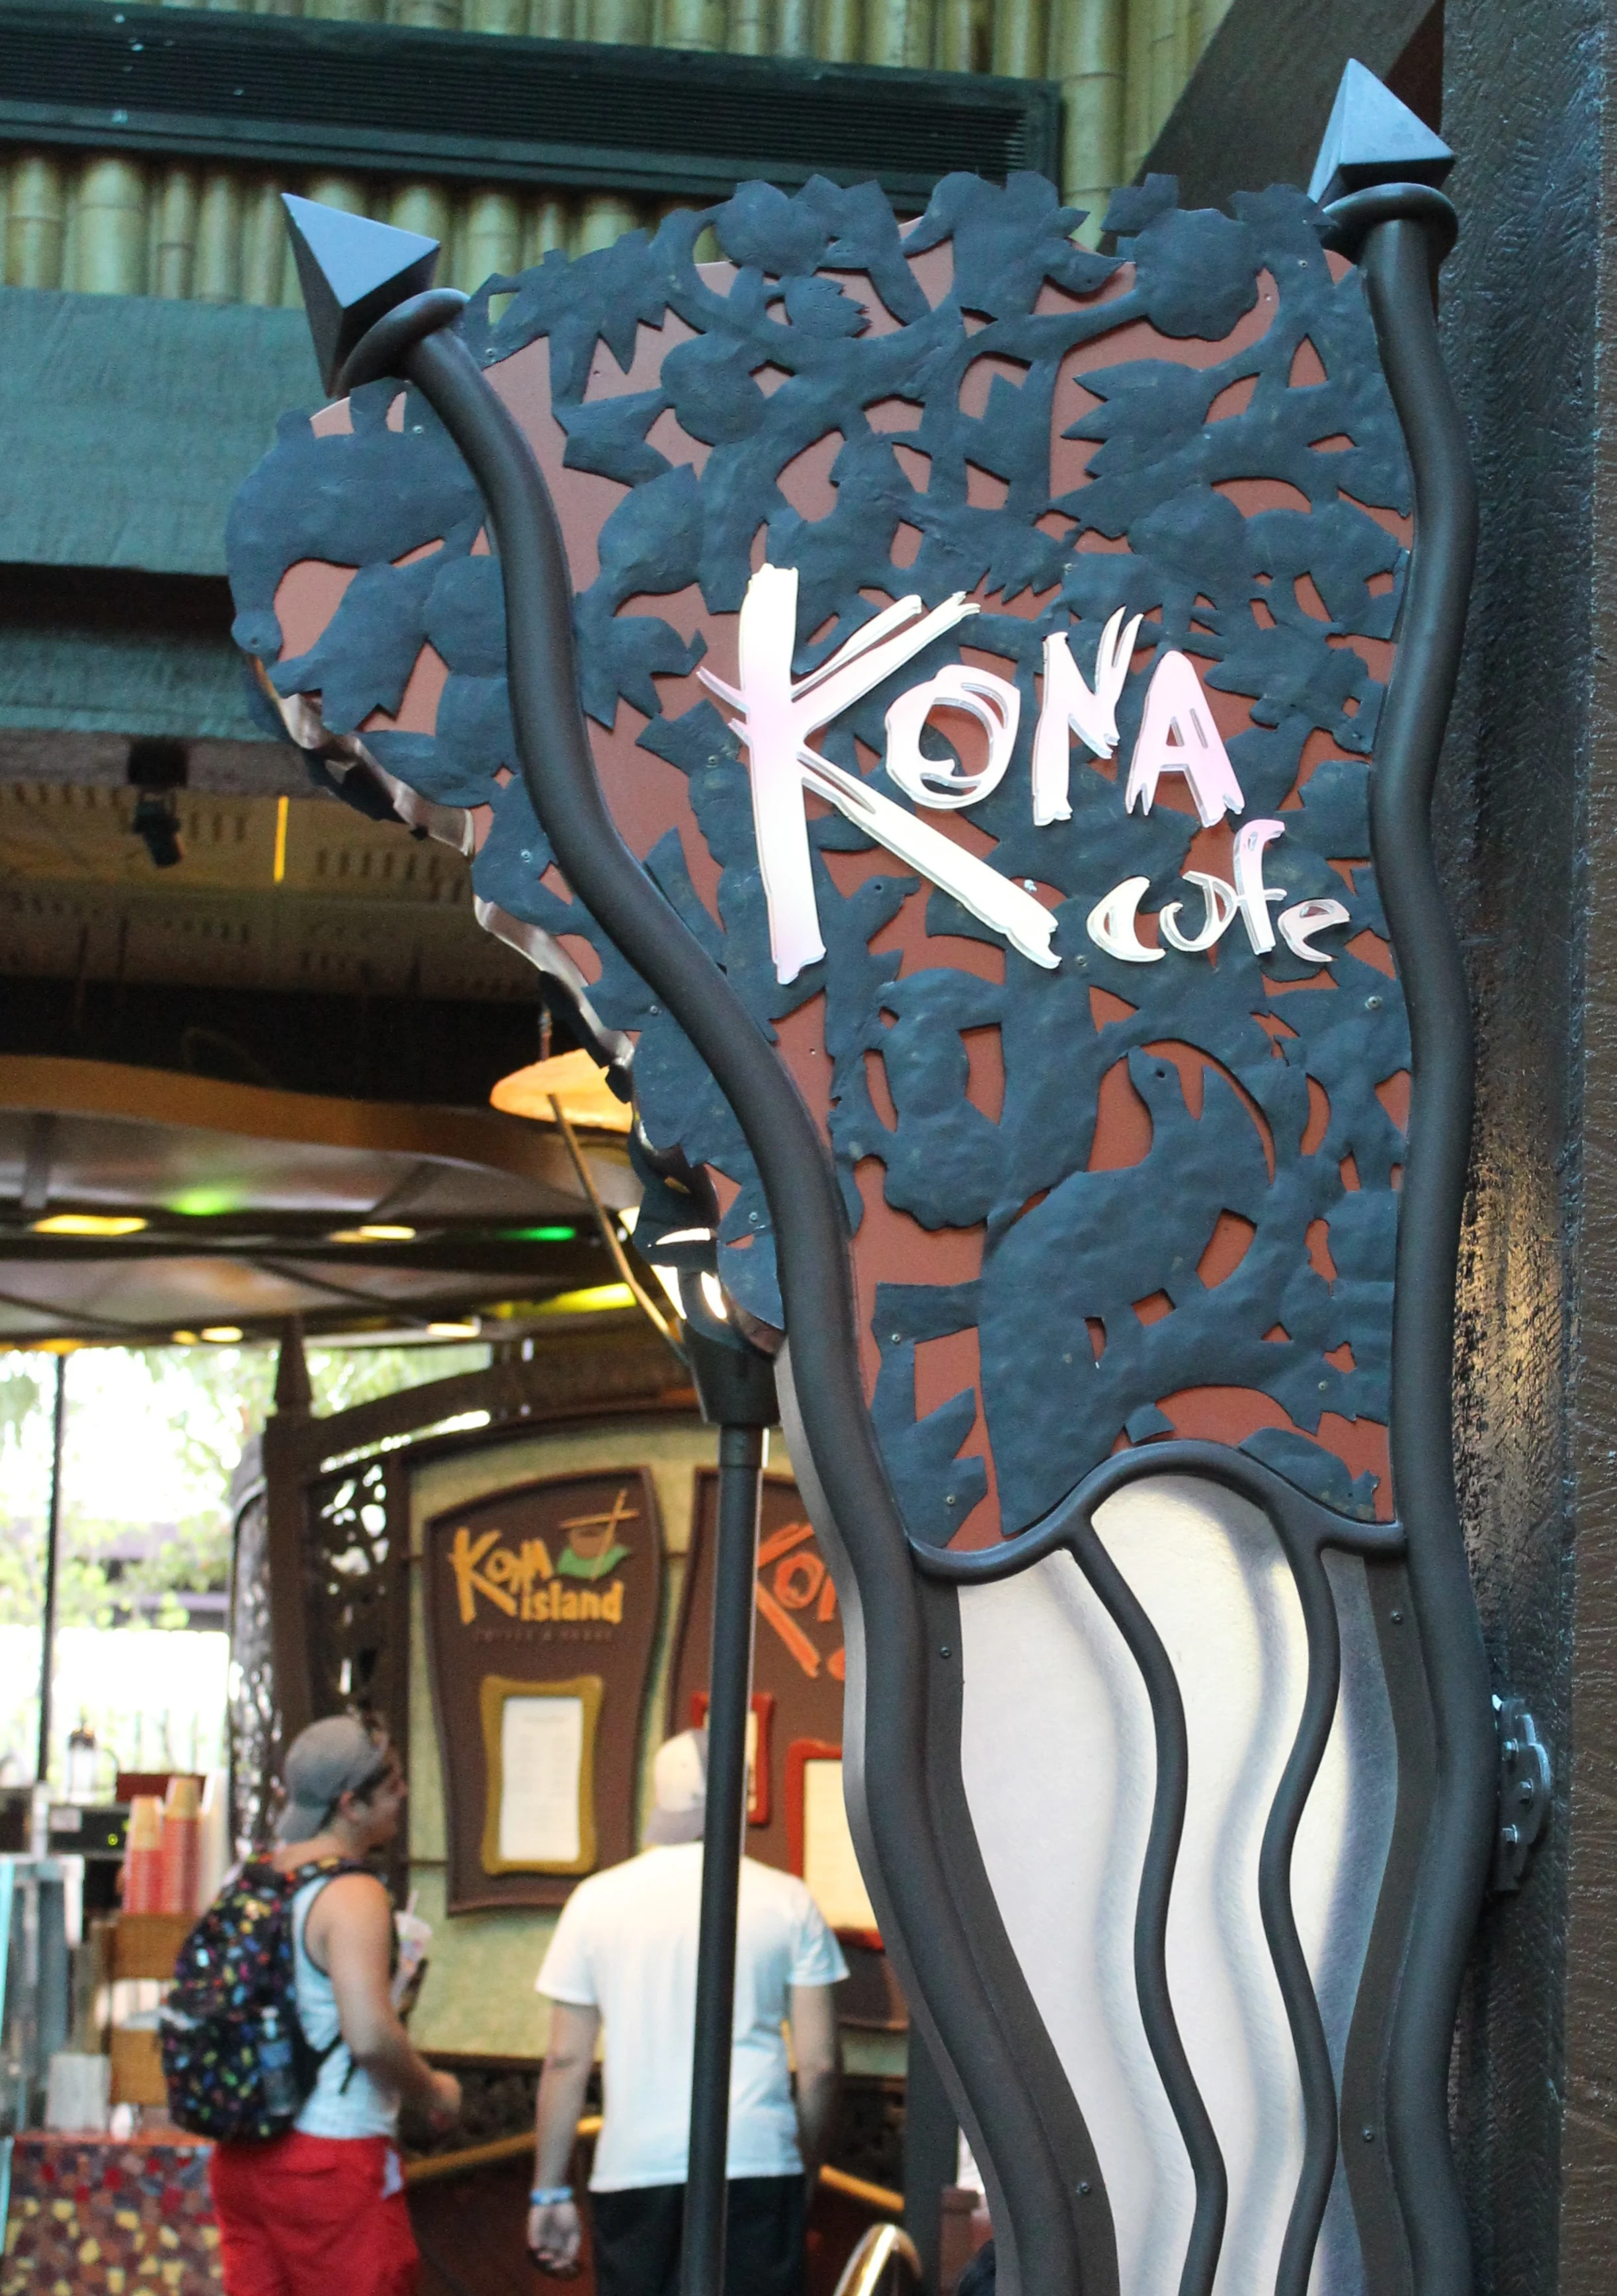 Kona Cafe sign